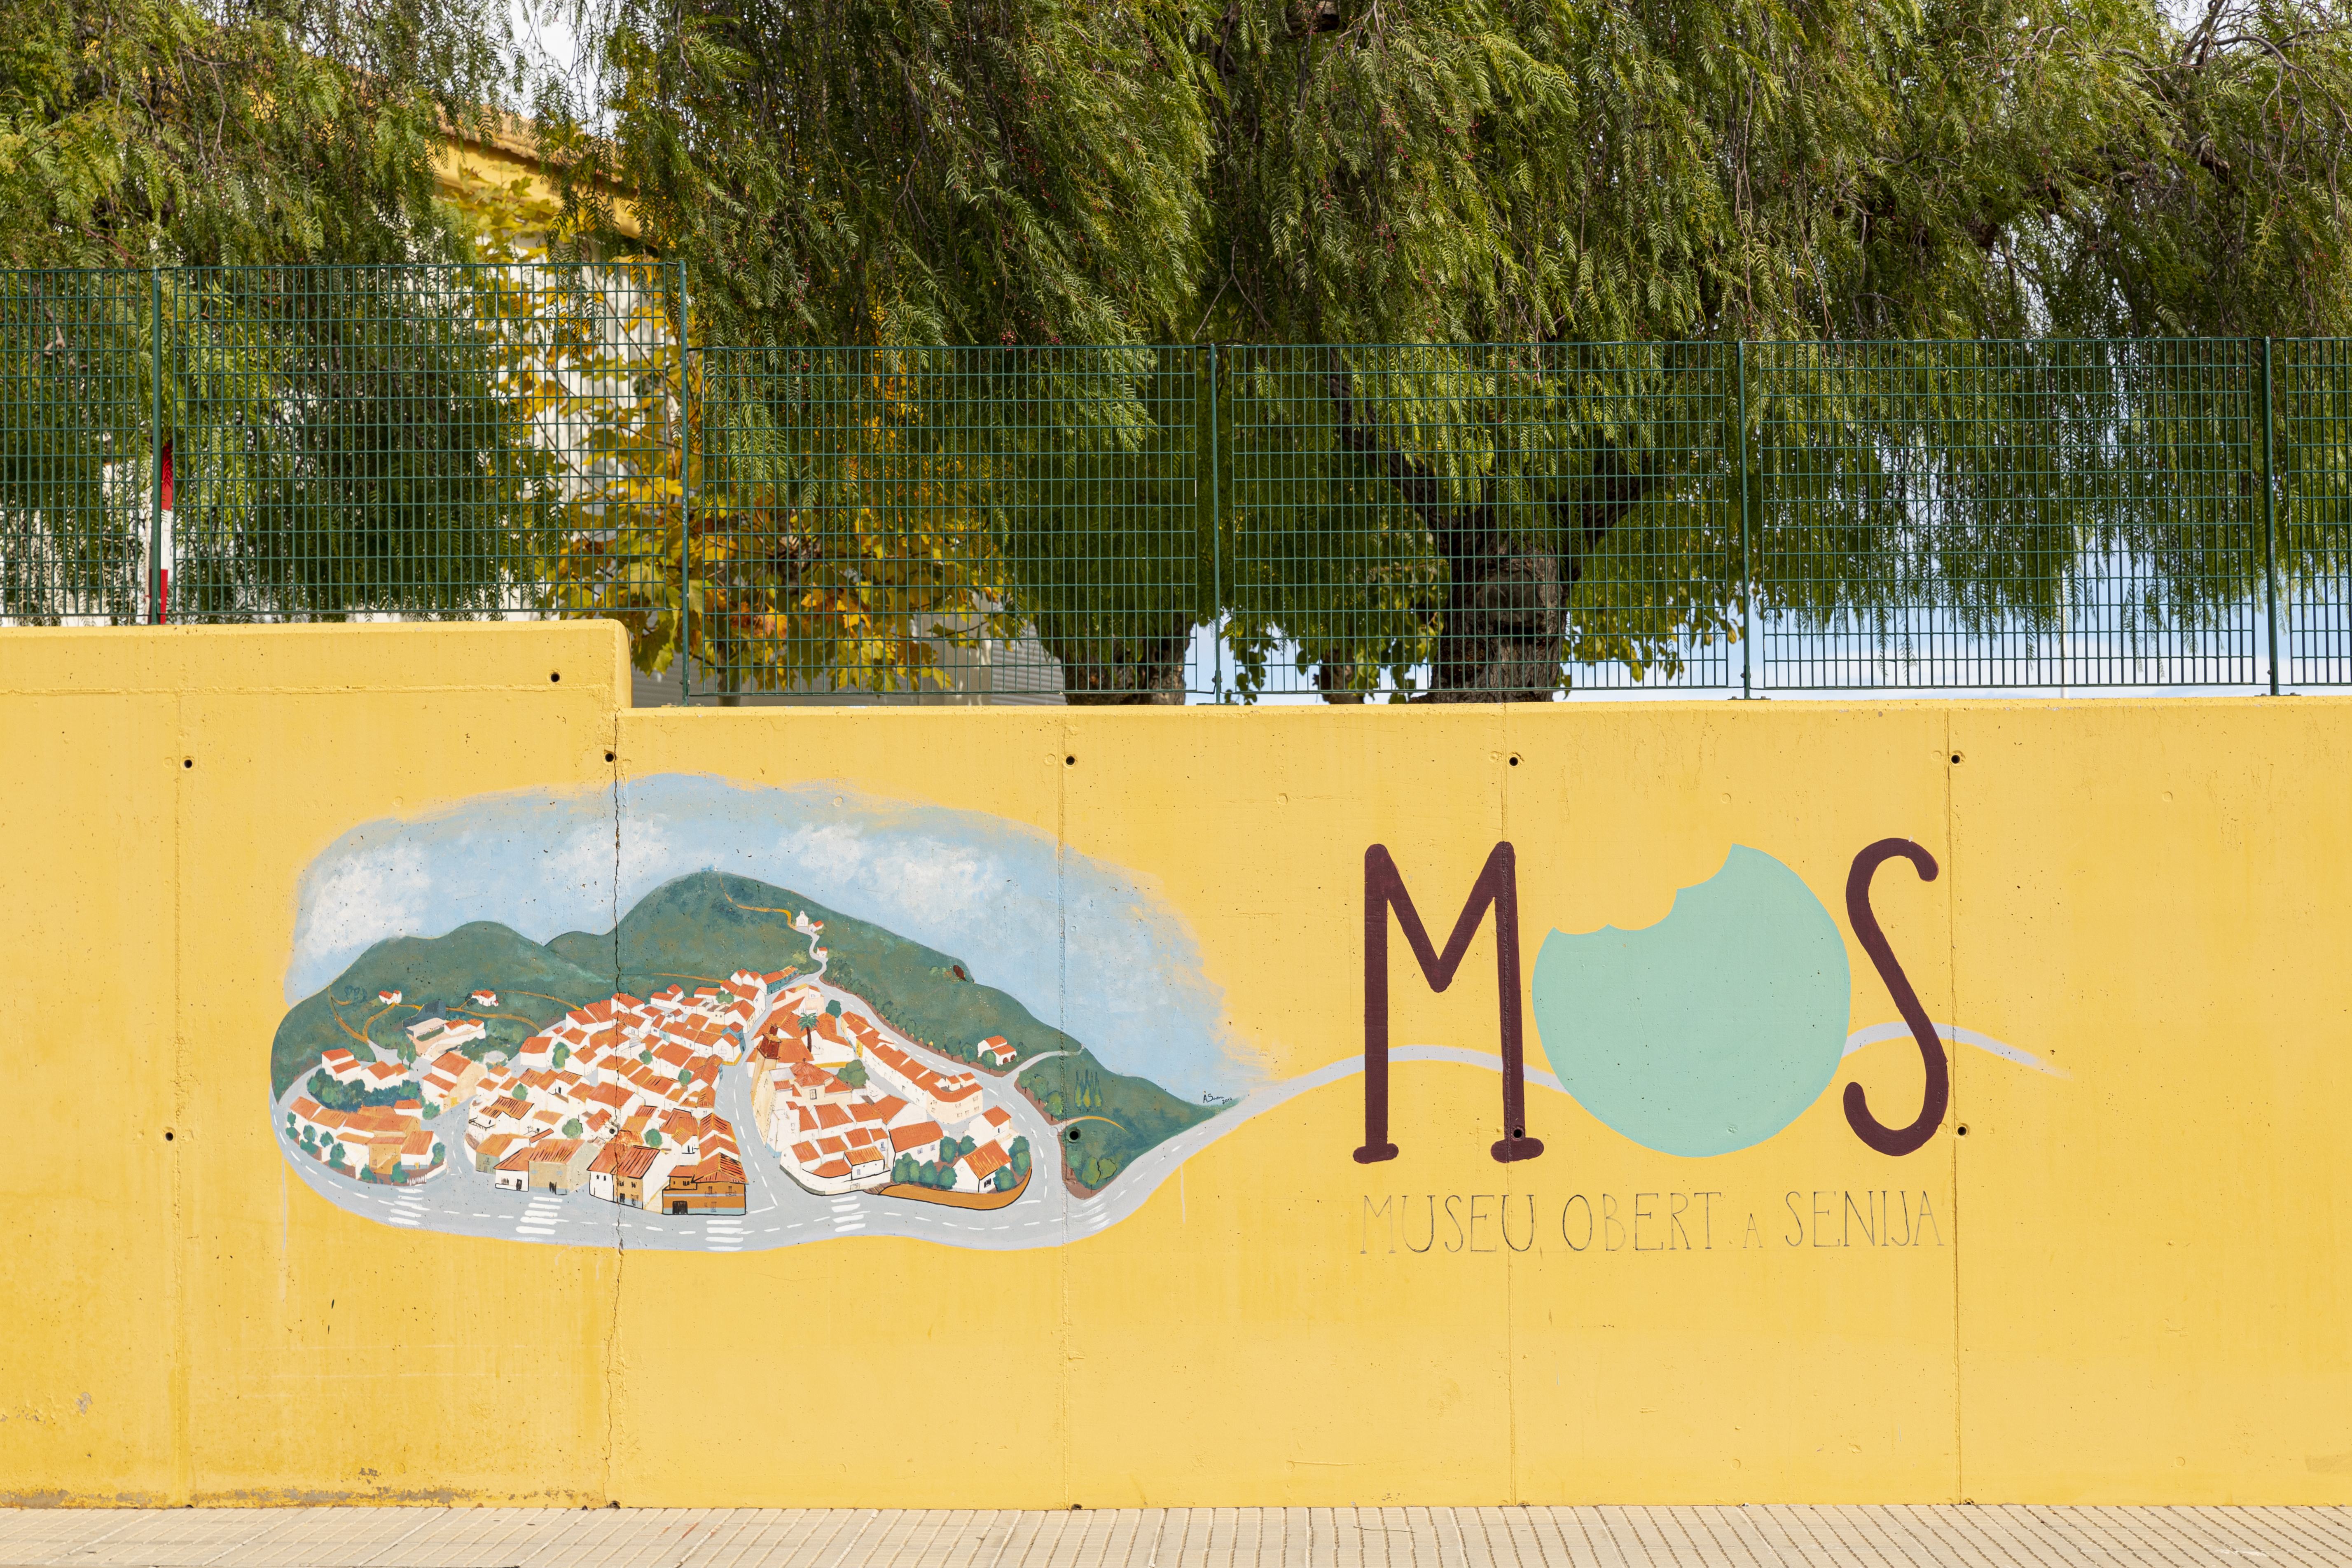 MOS - Museo abierto en Senija